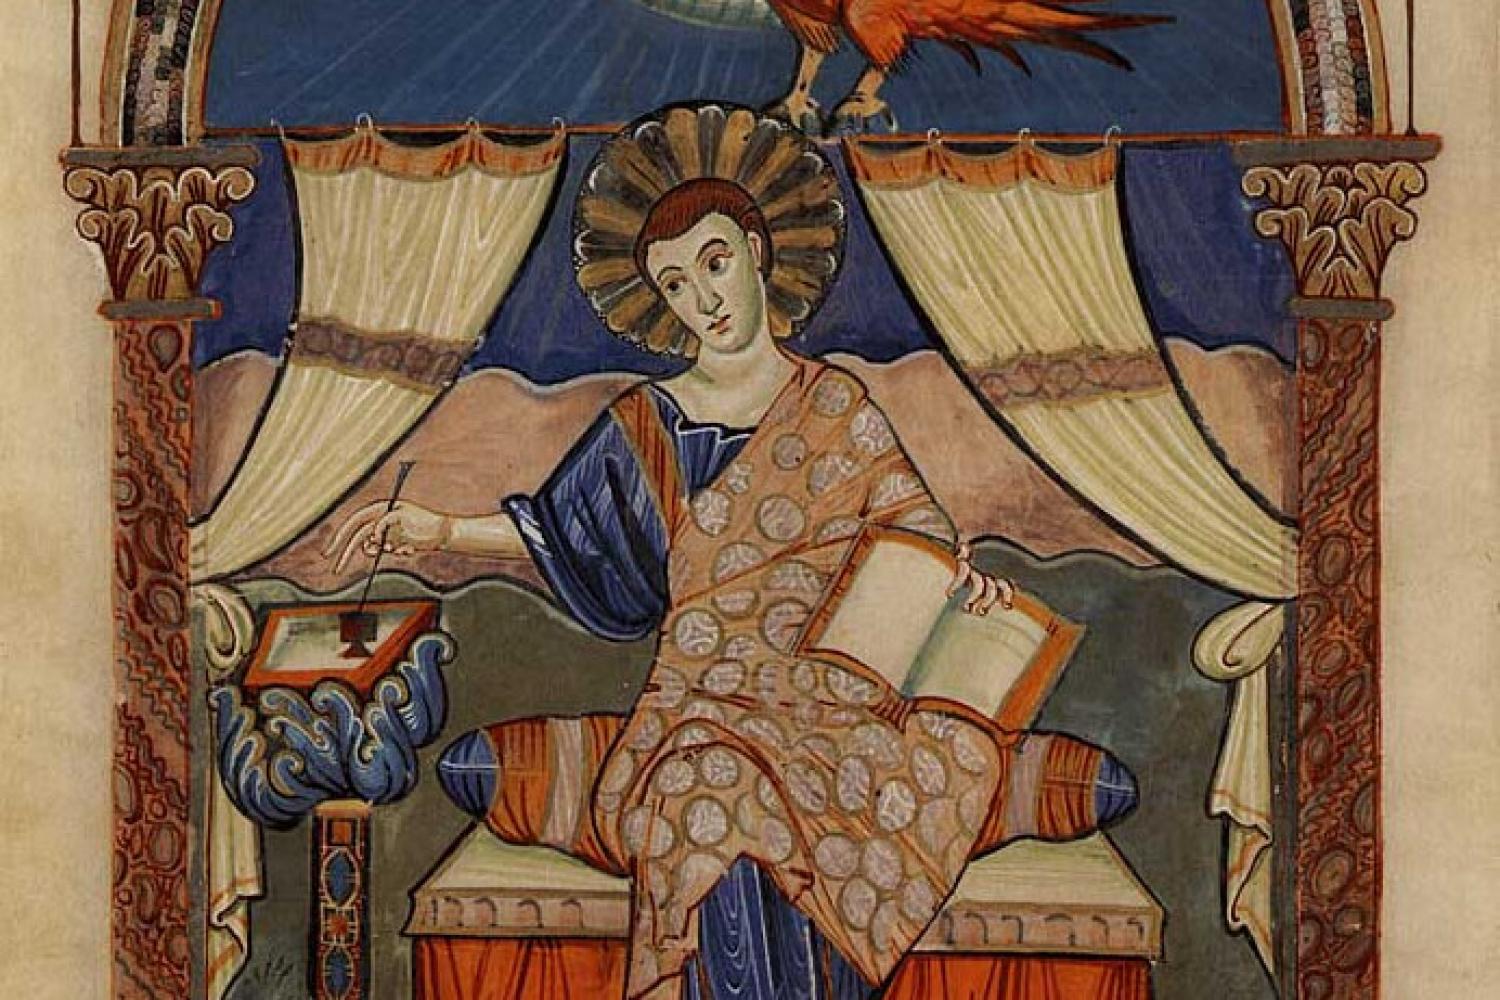 "St. John the Evangelist" from the Codex Aureus of Lorsch (c. AD 810)